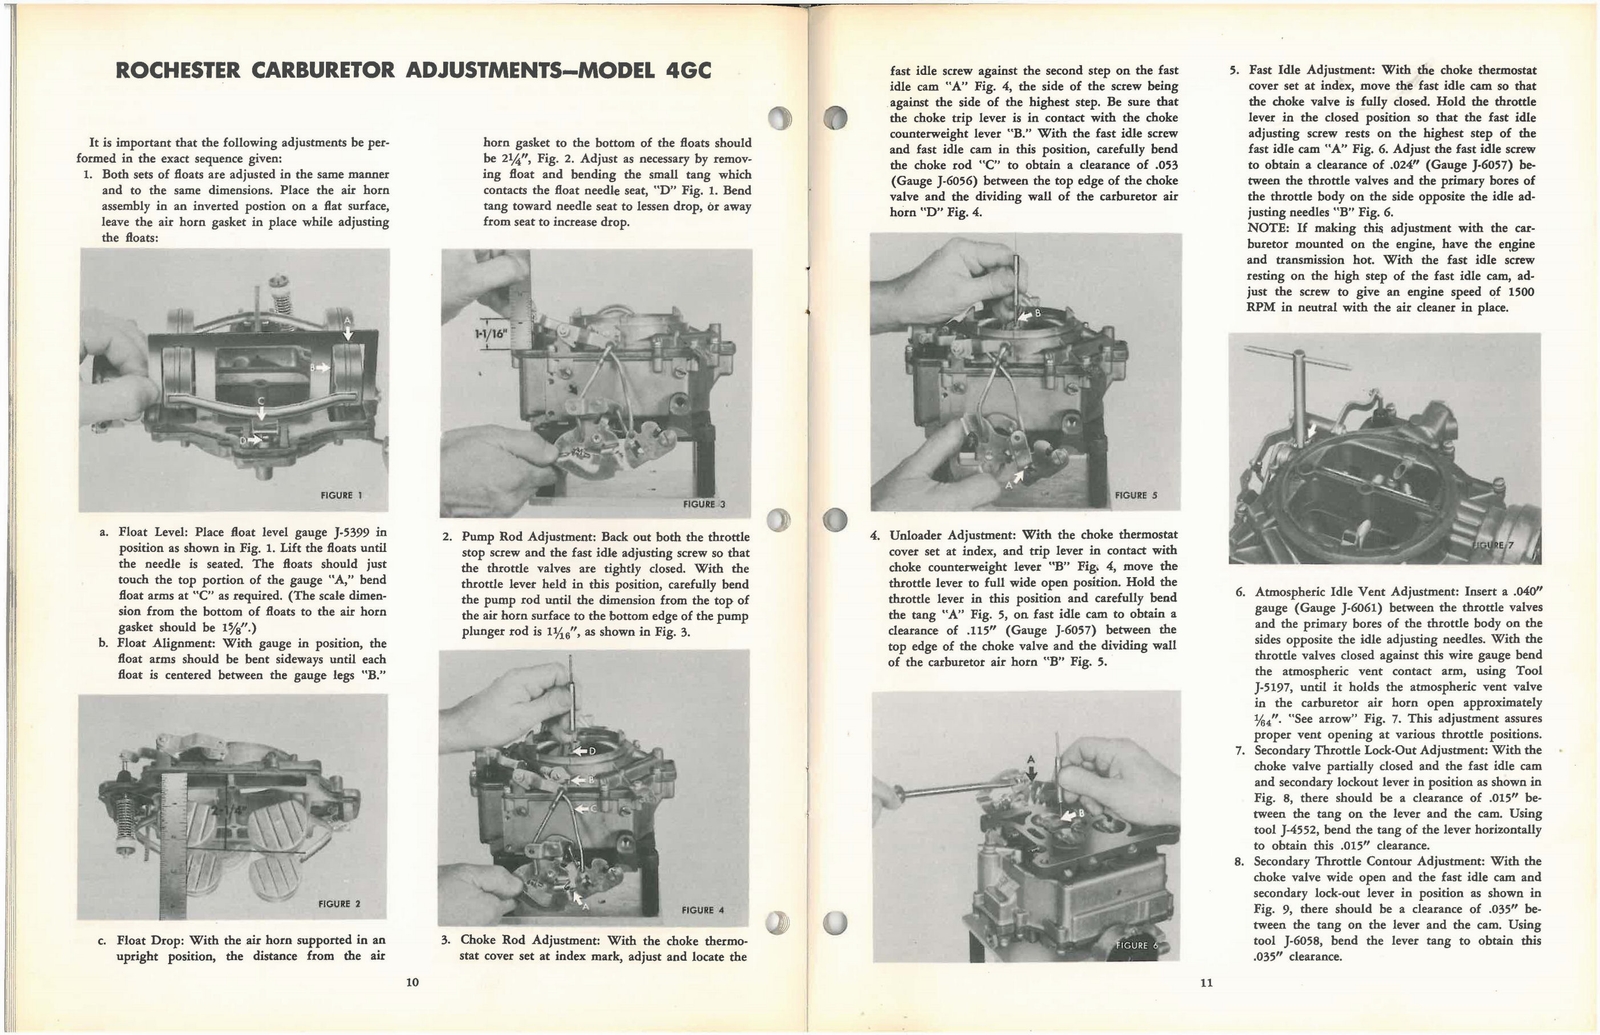 n_1955 Packard Sevicemens Training Book-10-11.jpg